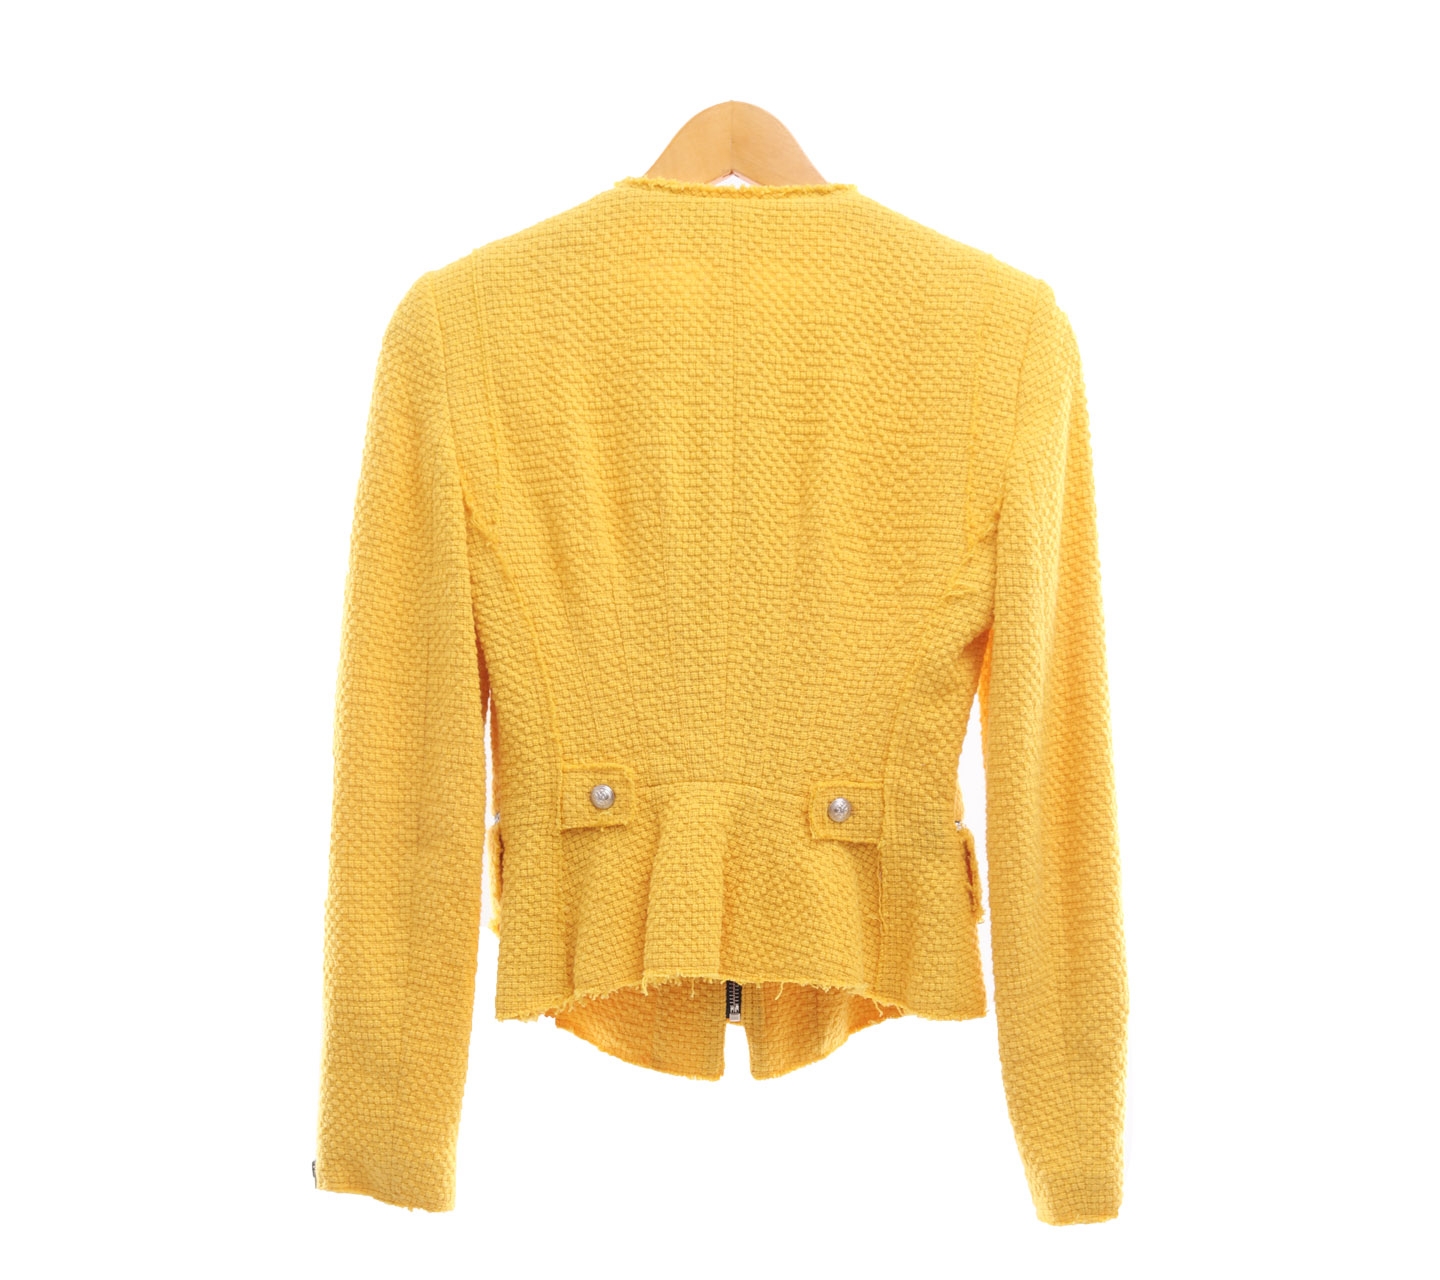 Zara Yellow Jacket